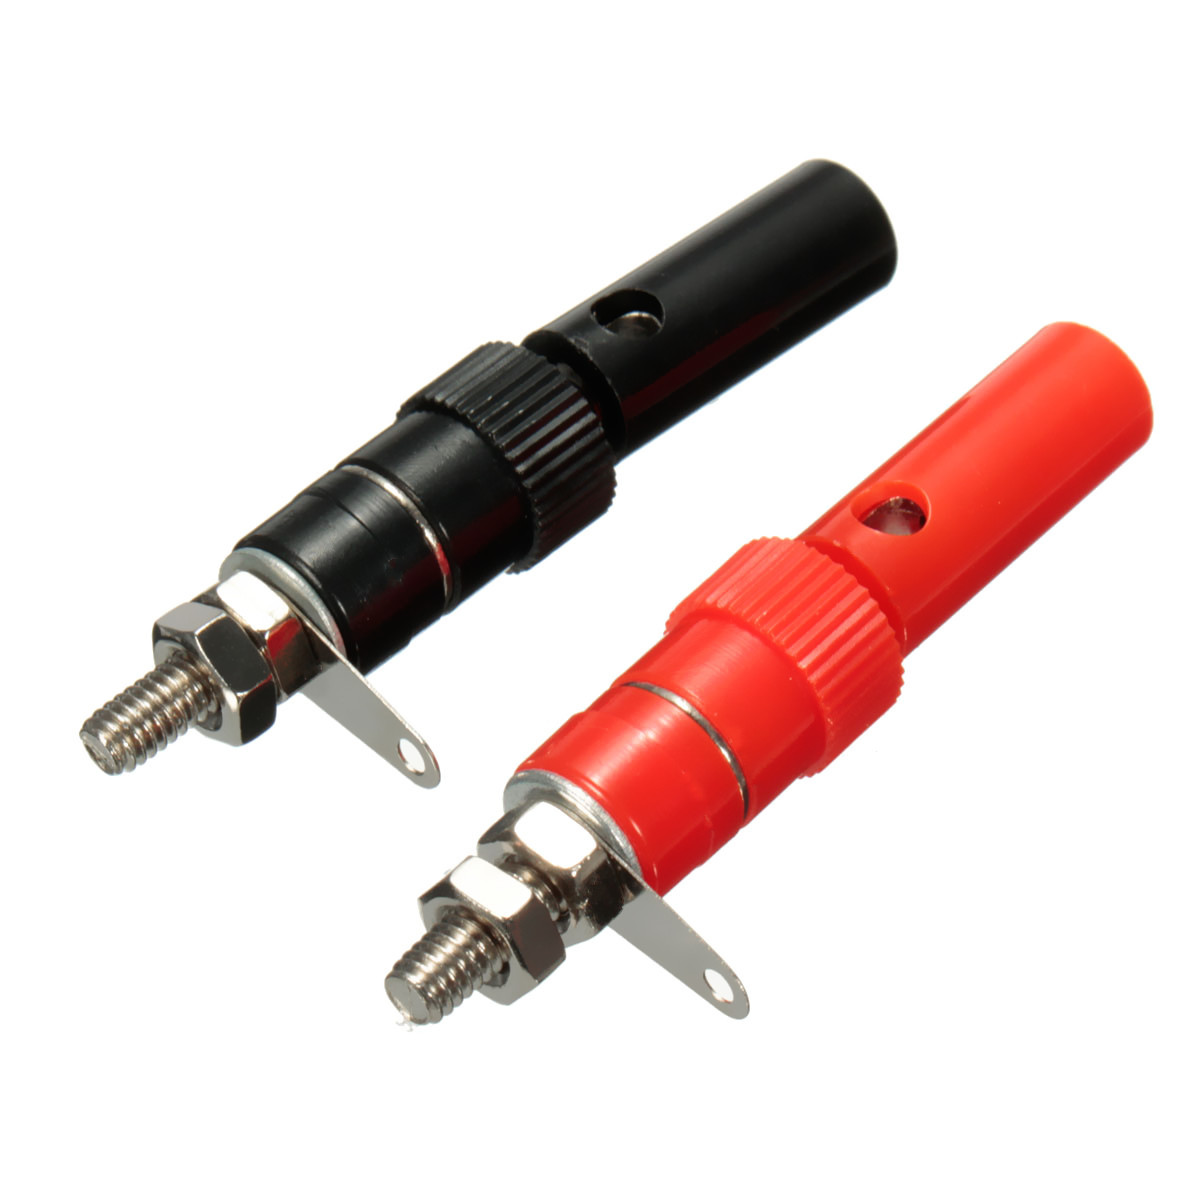 10 Pairs 4mm Terminal Banana Plug Socket Jack Connectors Instrument Light Tools Black and Red